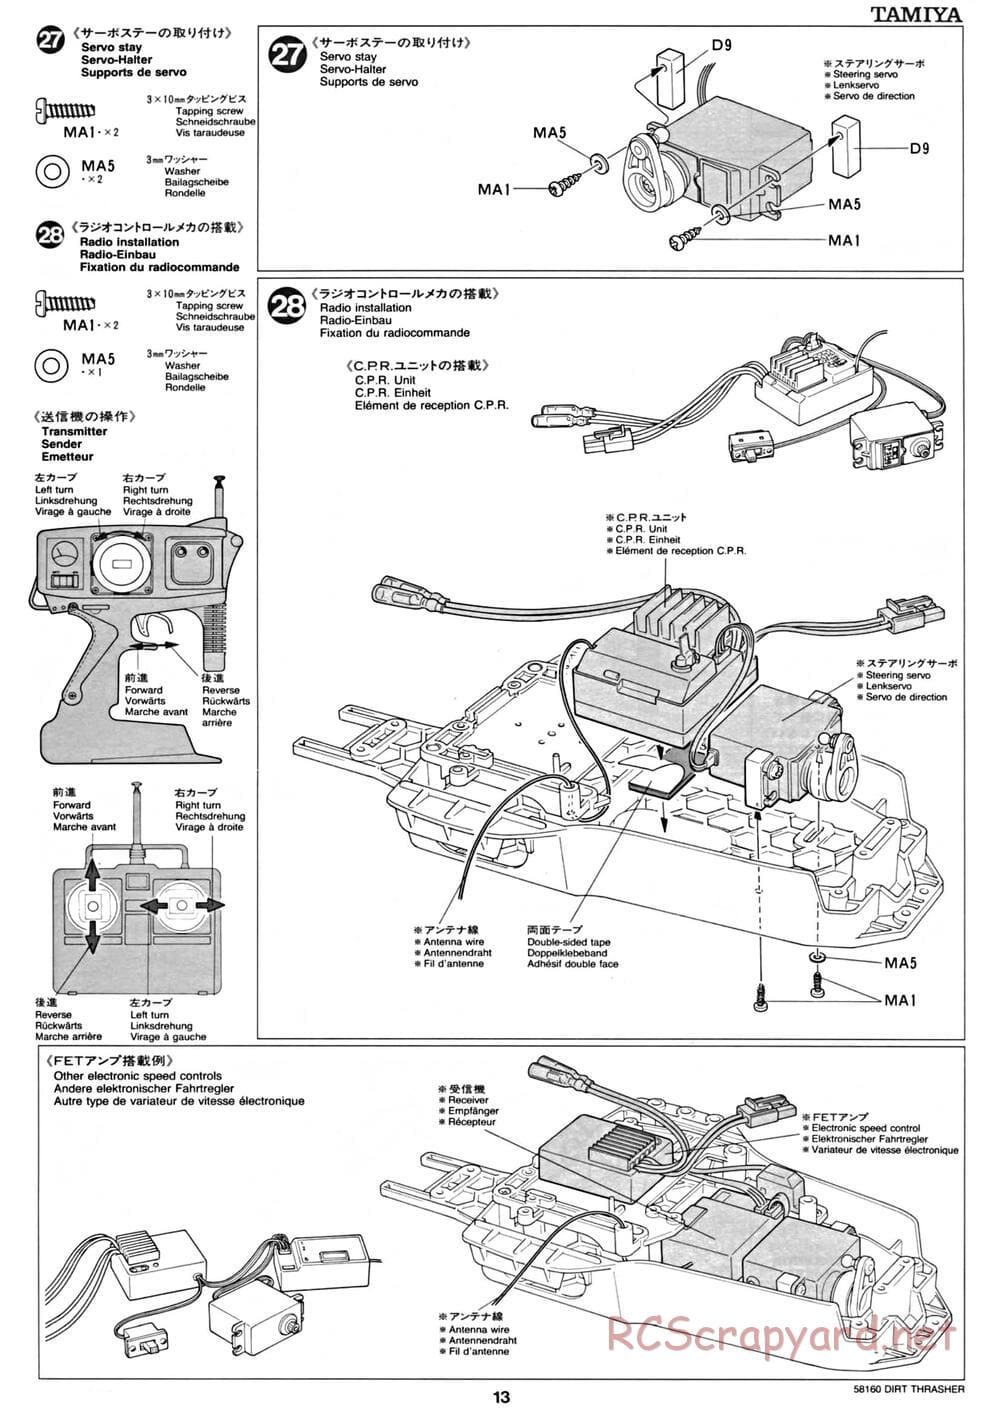 Tamiya - Dirt Thrasher Chassis - Manual - Page 13